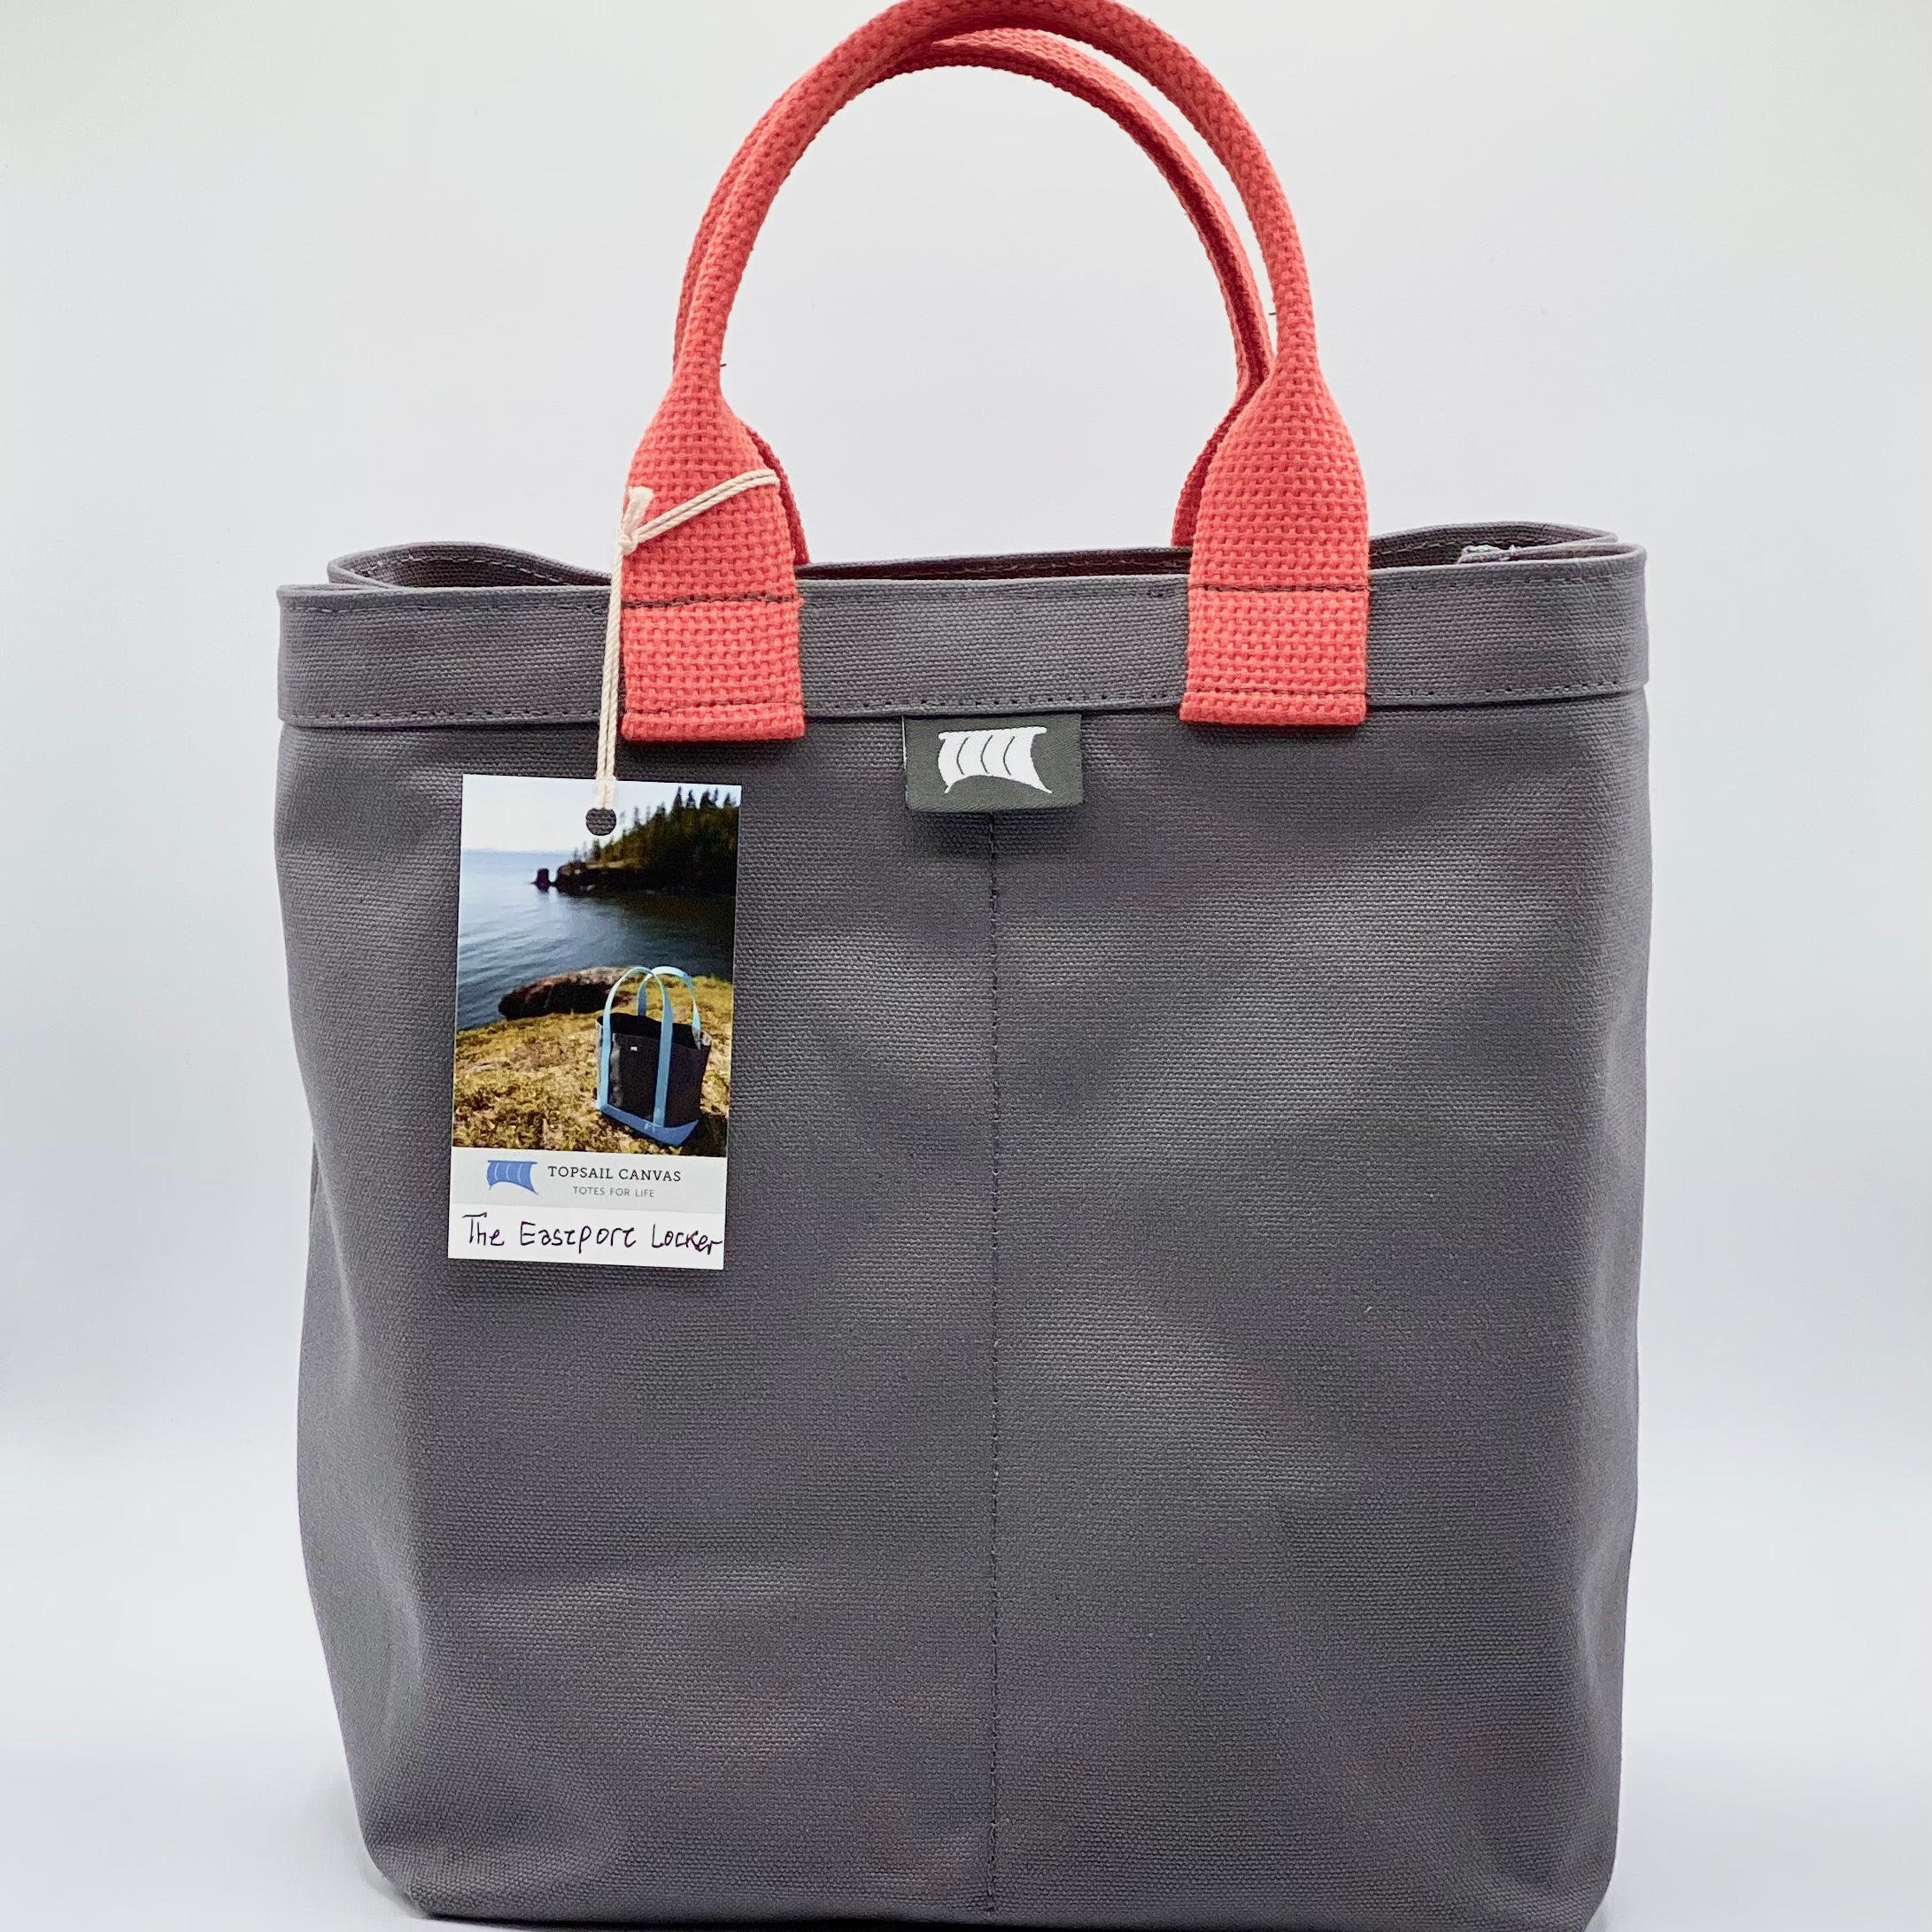 The Eastport Locker Bag by Topsail Canvas